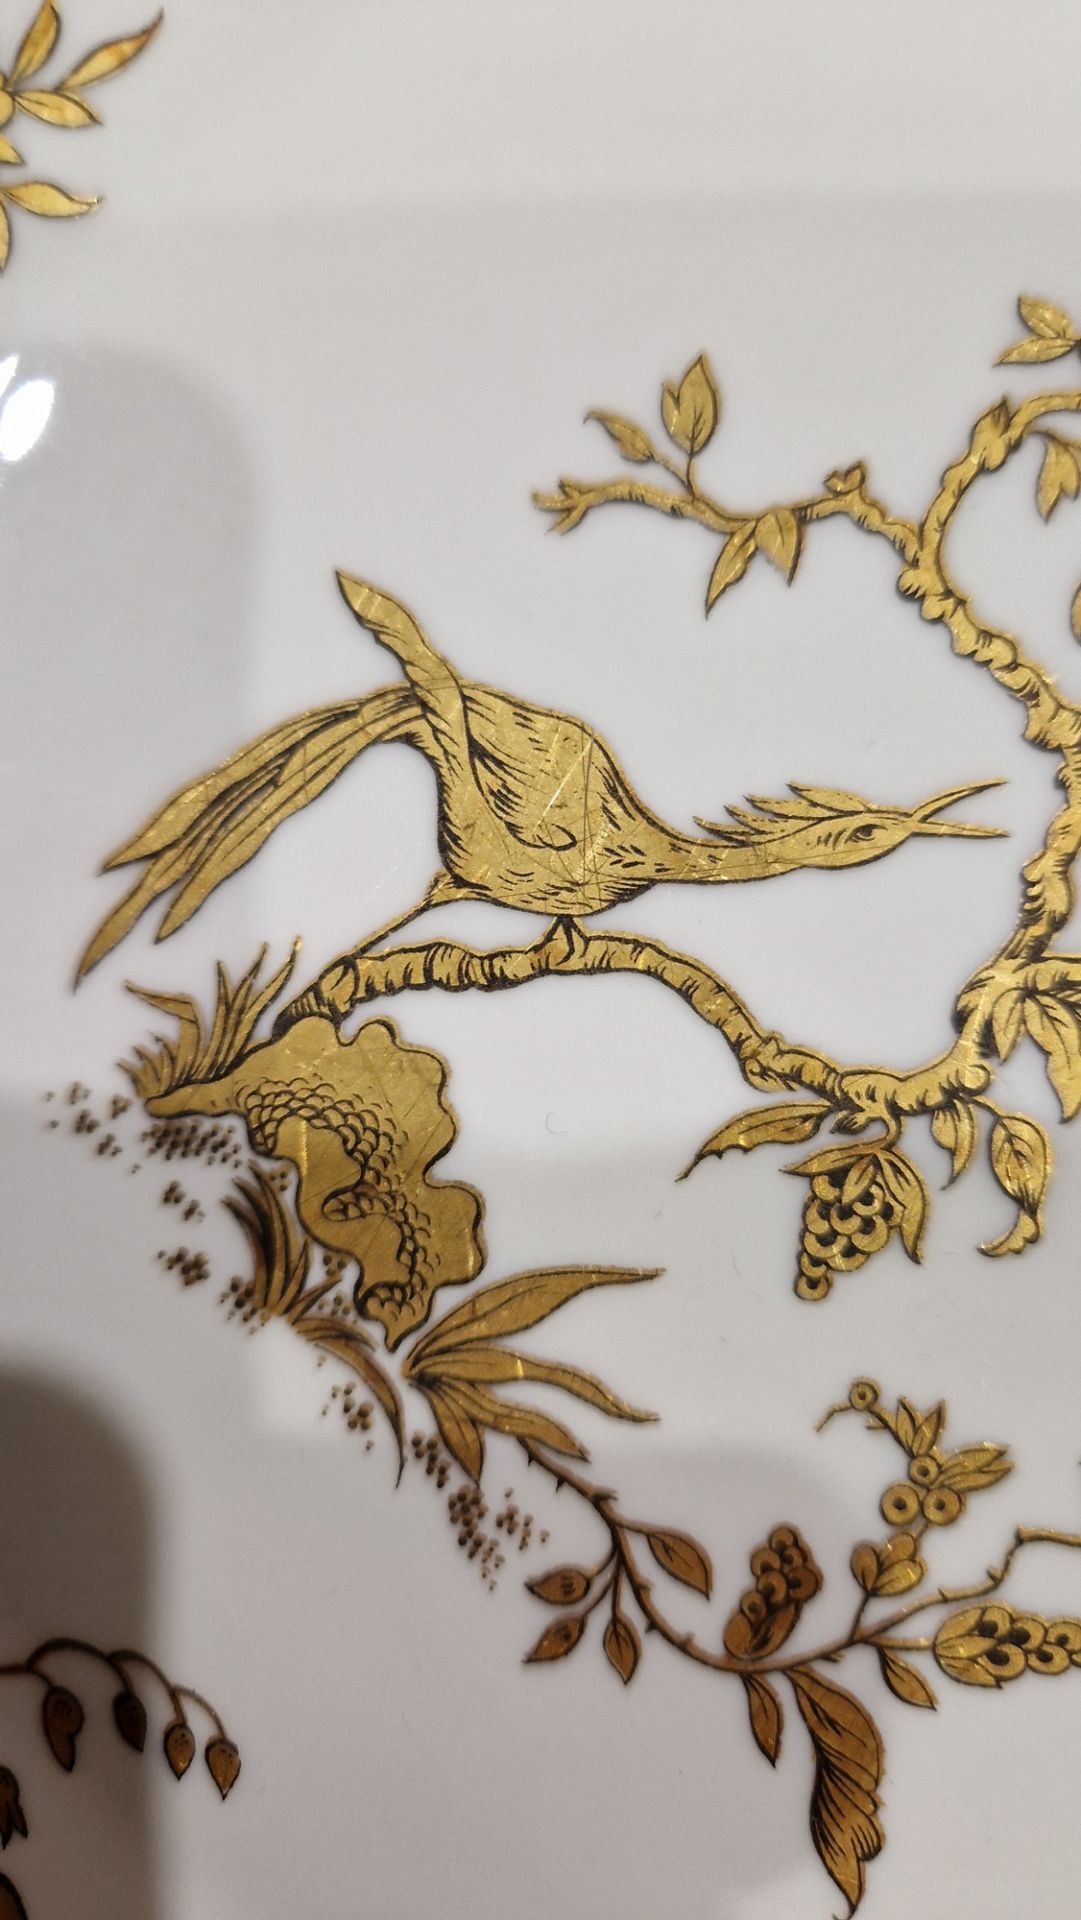 Extensive Limoges Bernardaud (B&C) porcelain 'Elizabeth' Golden Phoenix pattern part dinner and - Image 12 of 13